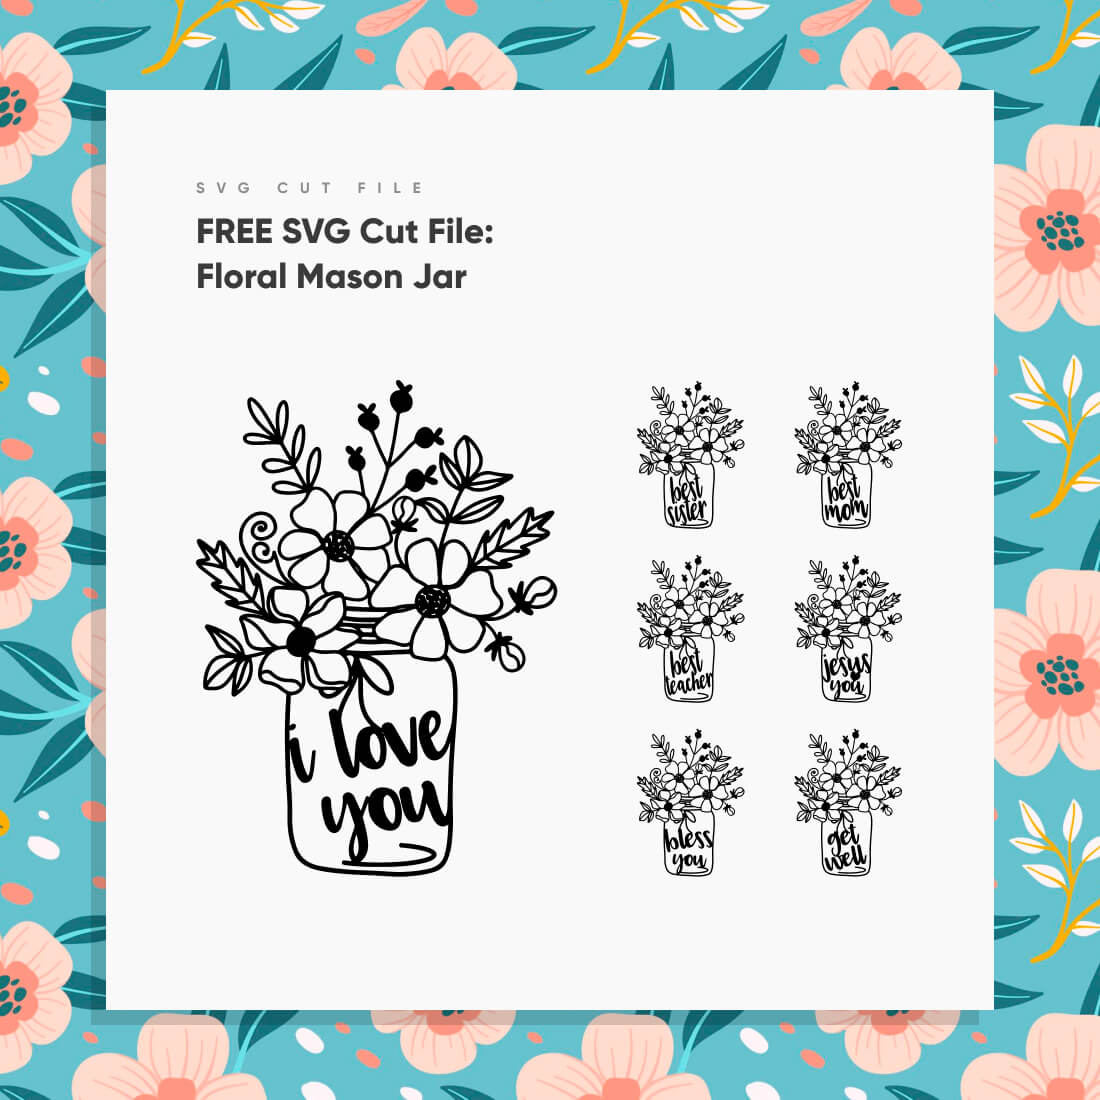 FREE SVG Cut File: Floral Mason Jar cover image.